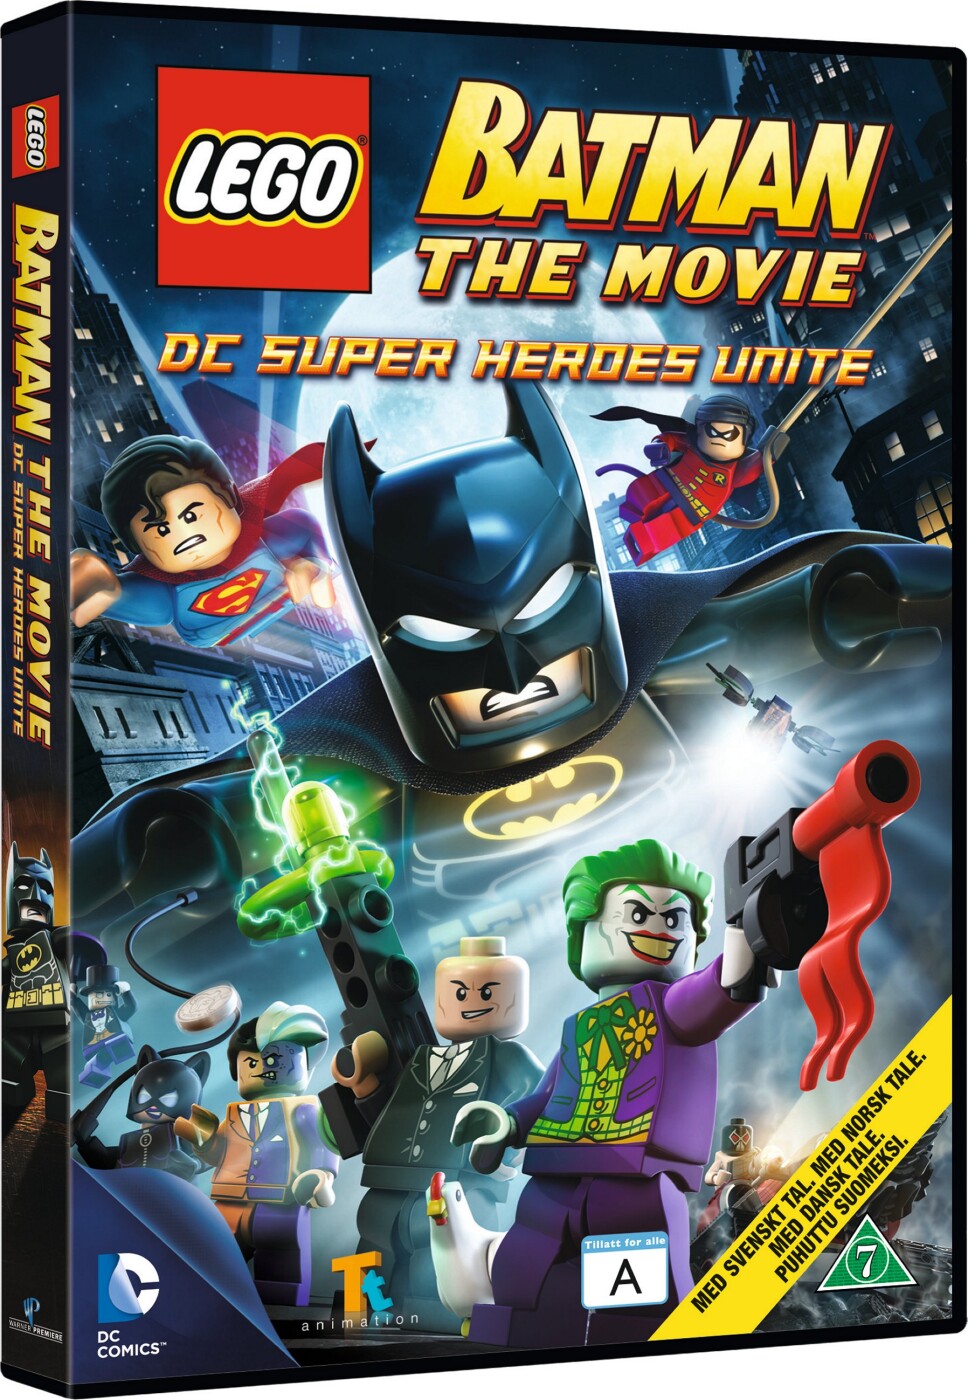 #3 - Lego: Batman The Movie - DVD - Film